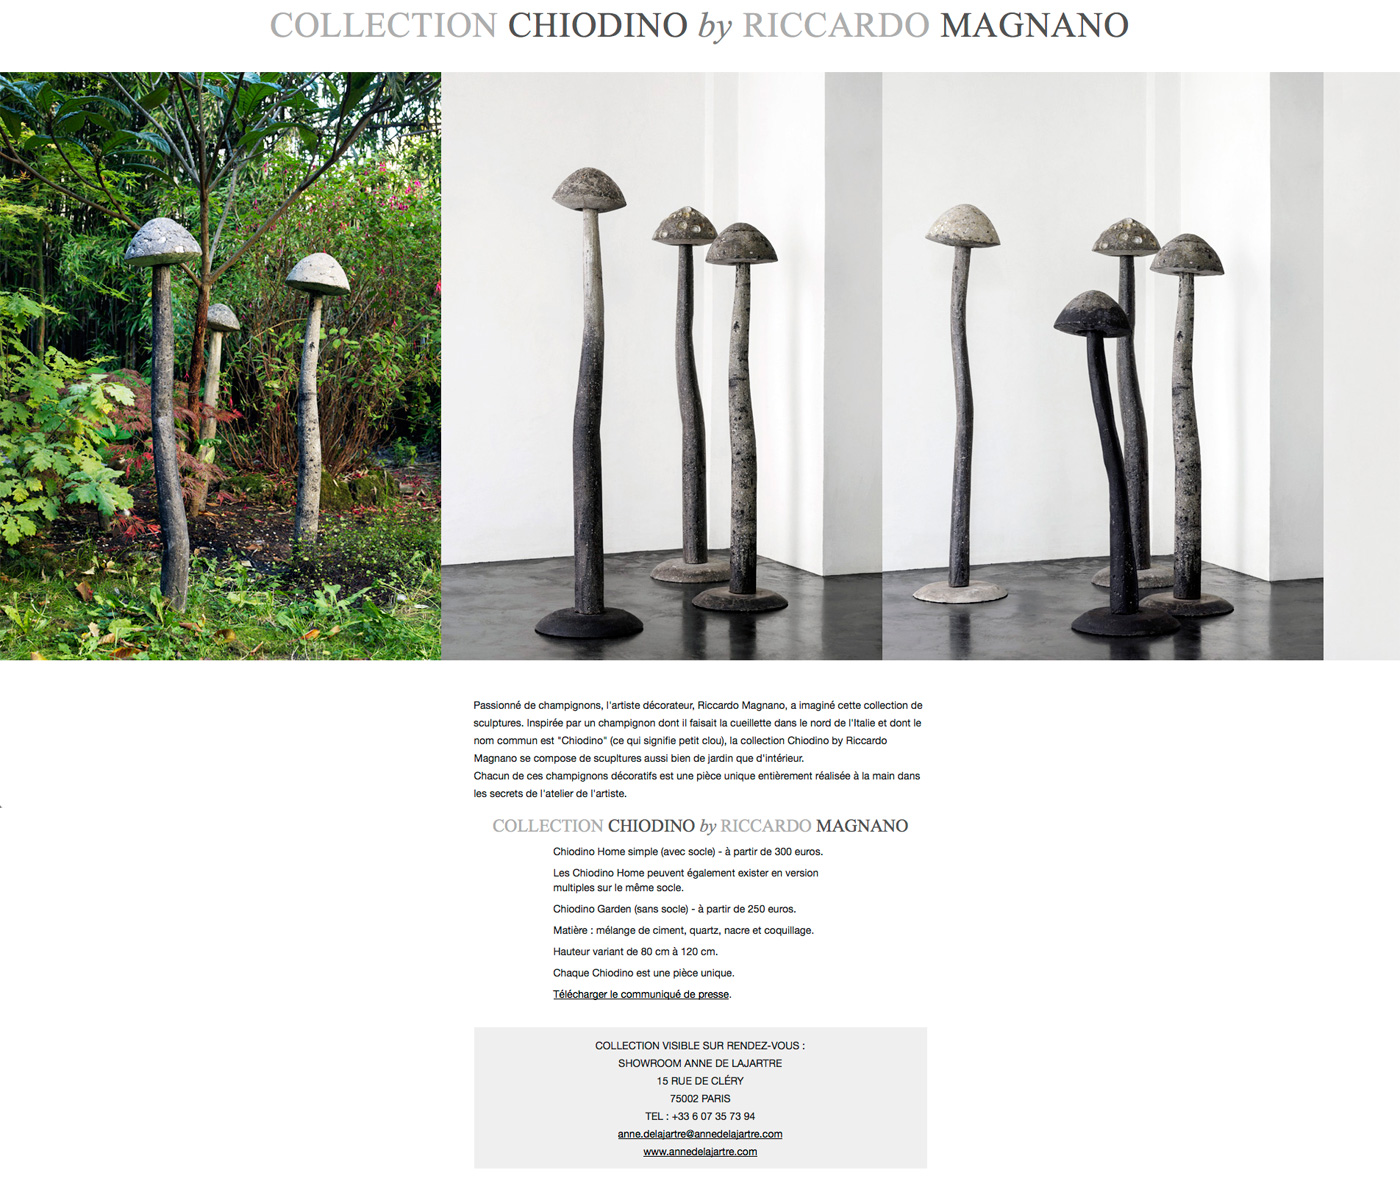 Chiodino by Riccardo Magnano